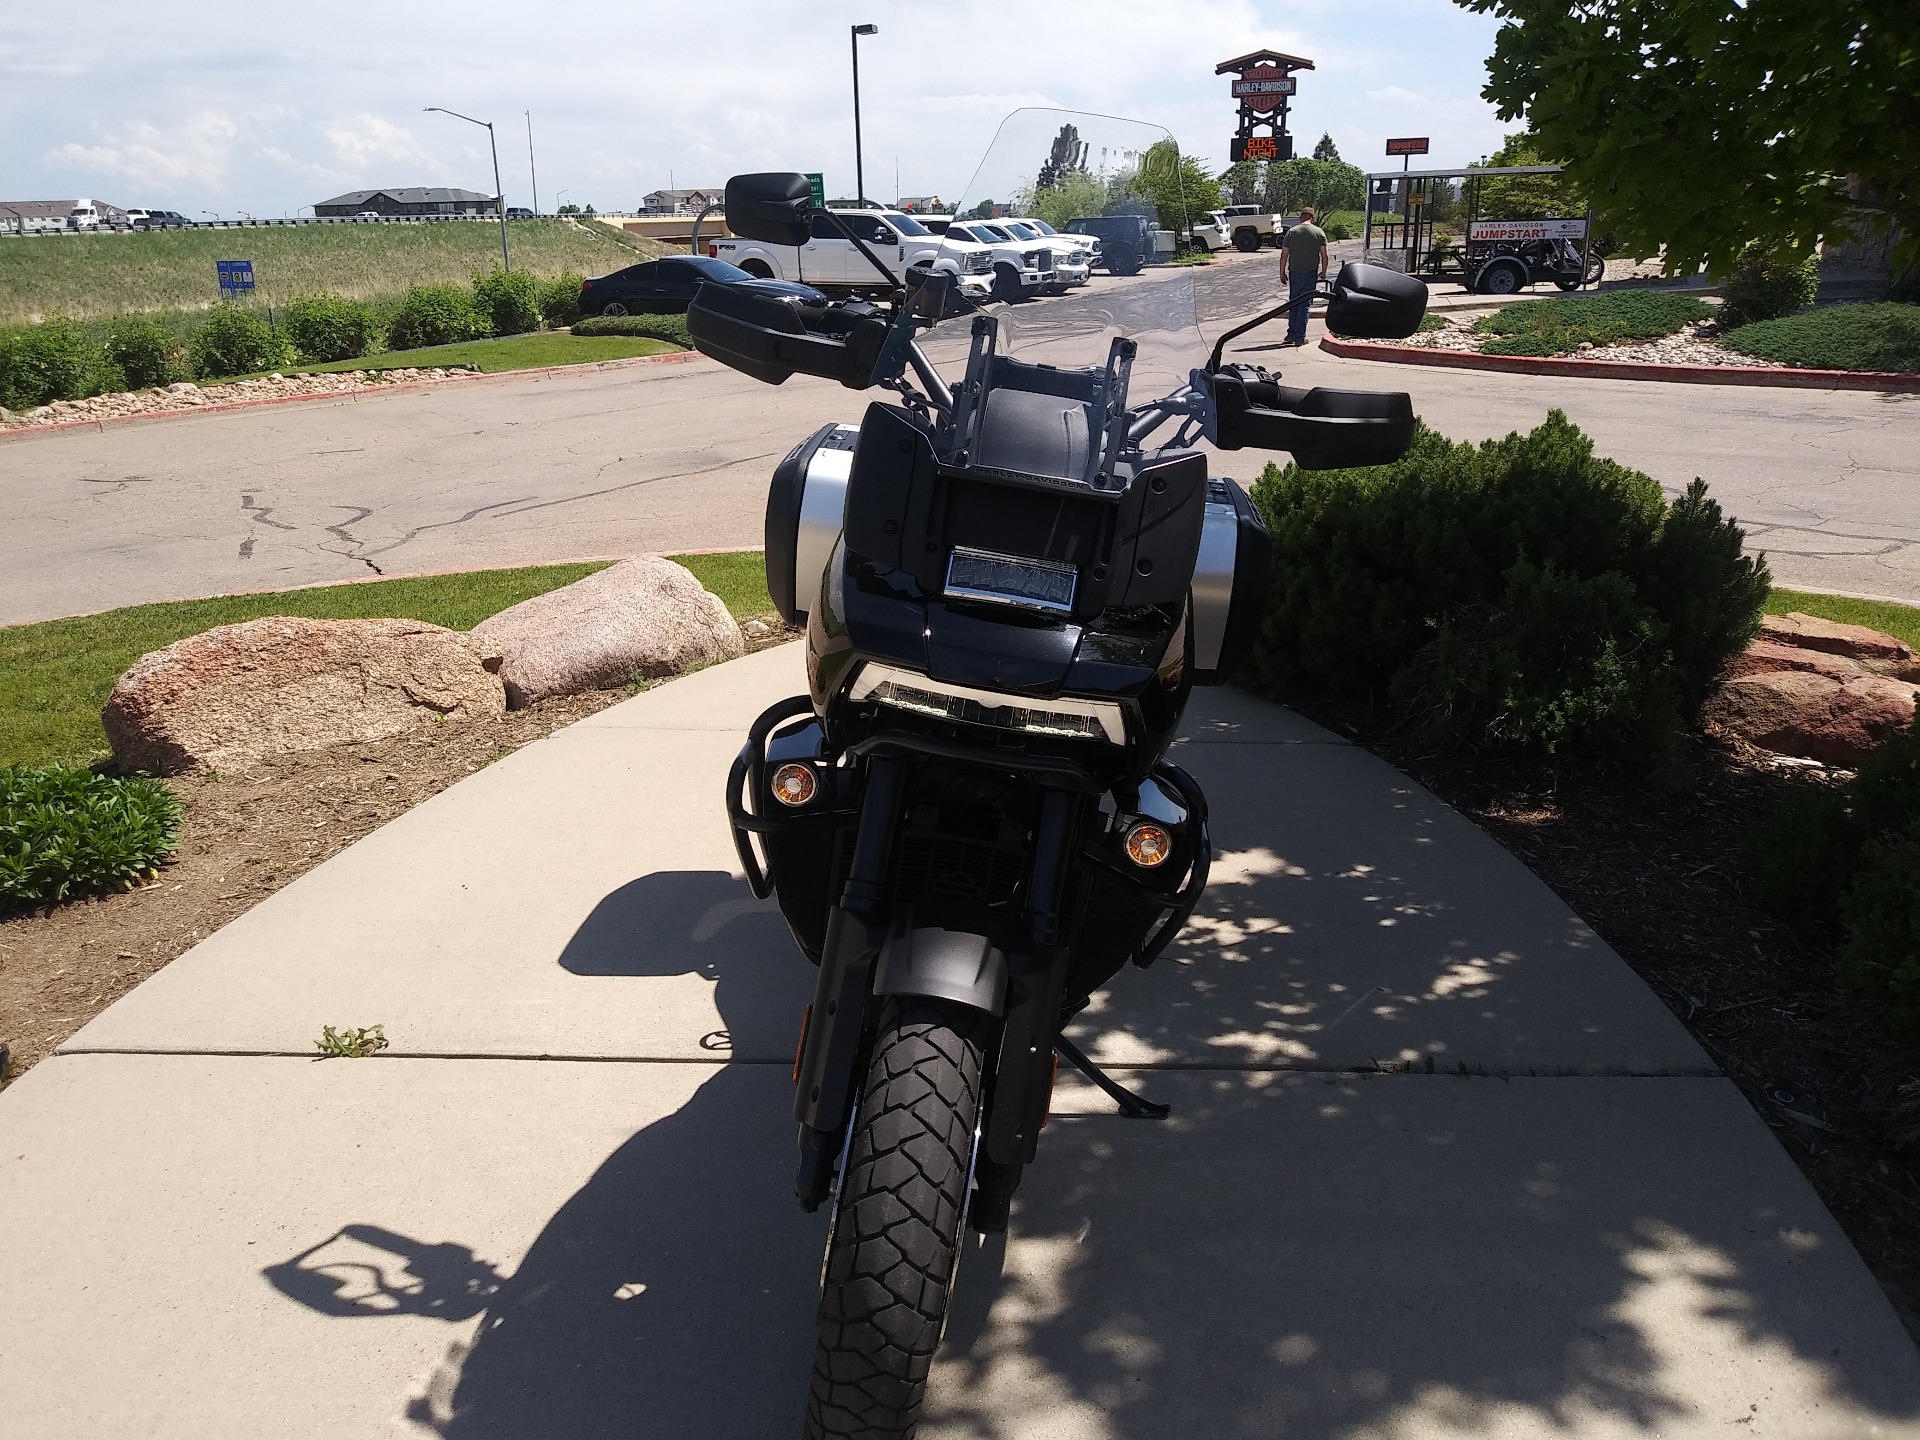 2021 Harley-Davidson Pan America™ Special in Loveland, Colorado - Photo 3